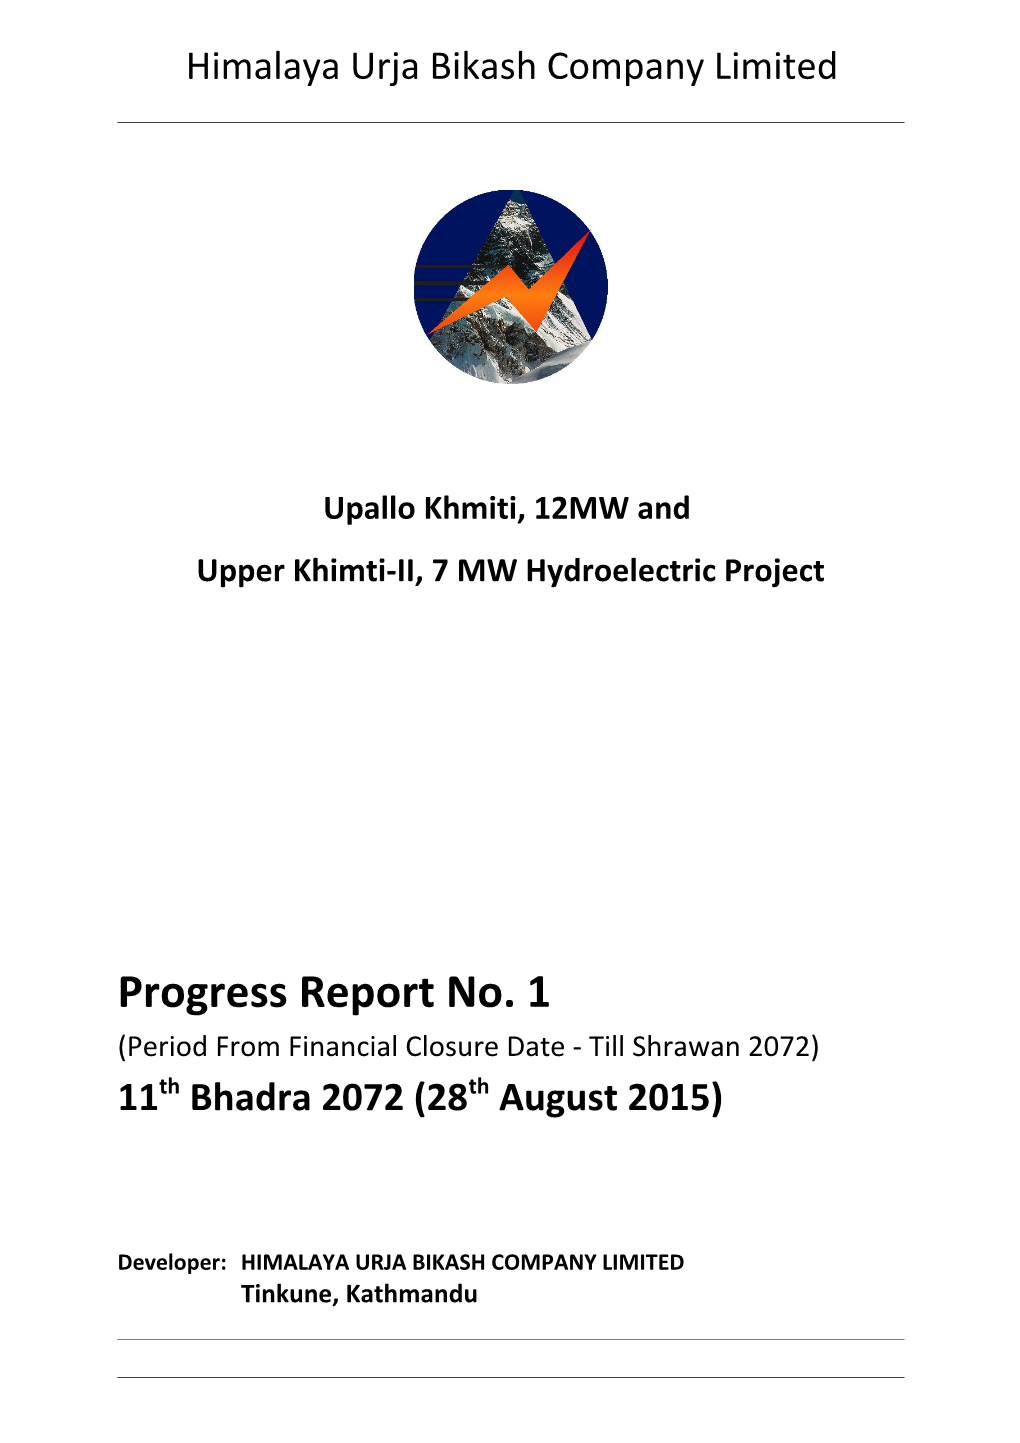 Upper Khimti-II, 7 MW Hydroelectric Project